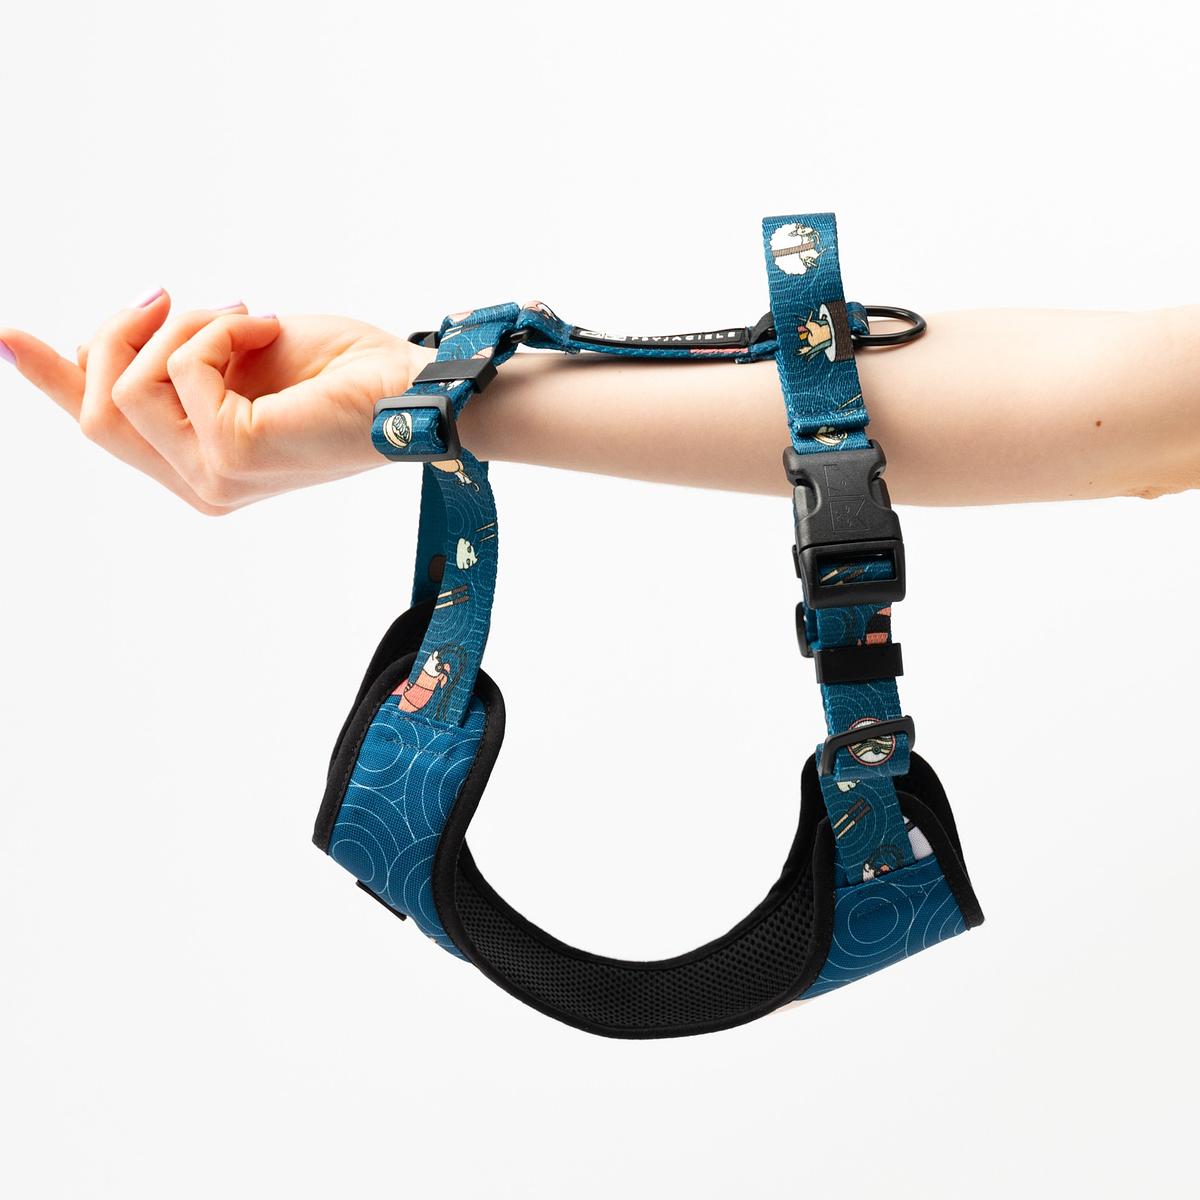 Stay-on pressure-free harness "Doggomaki"